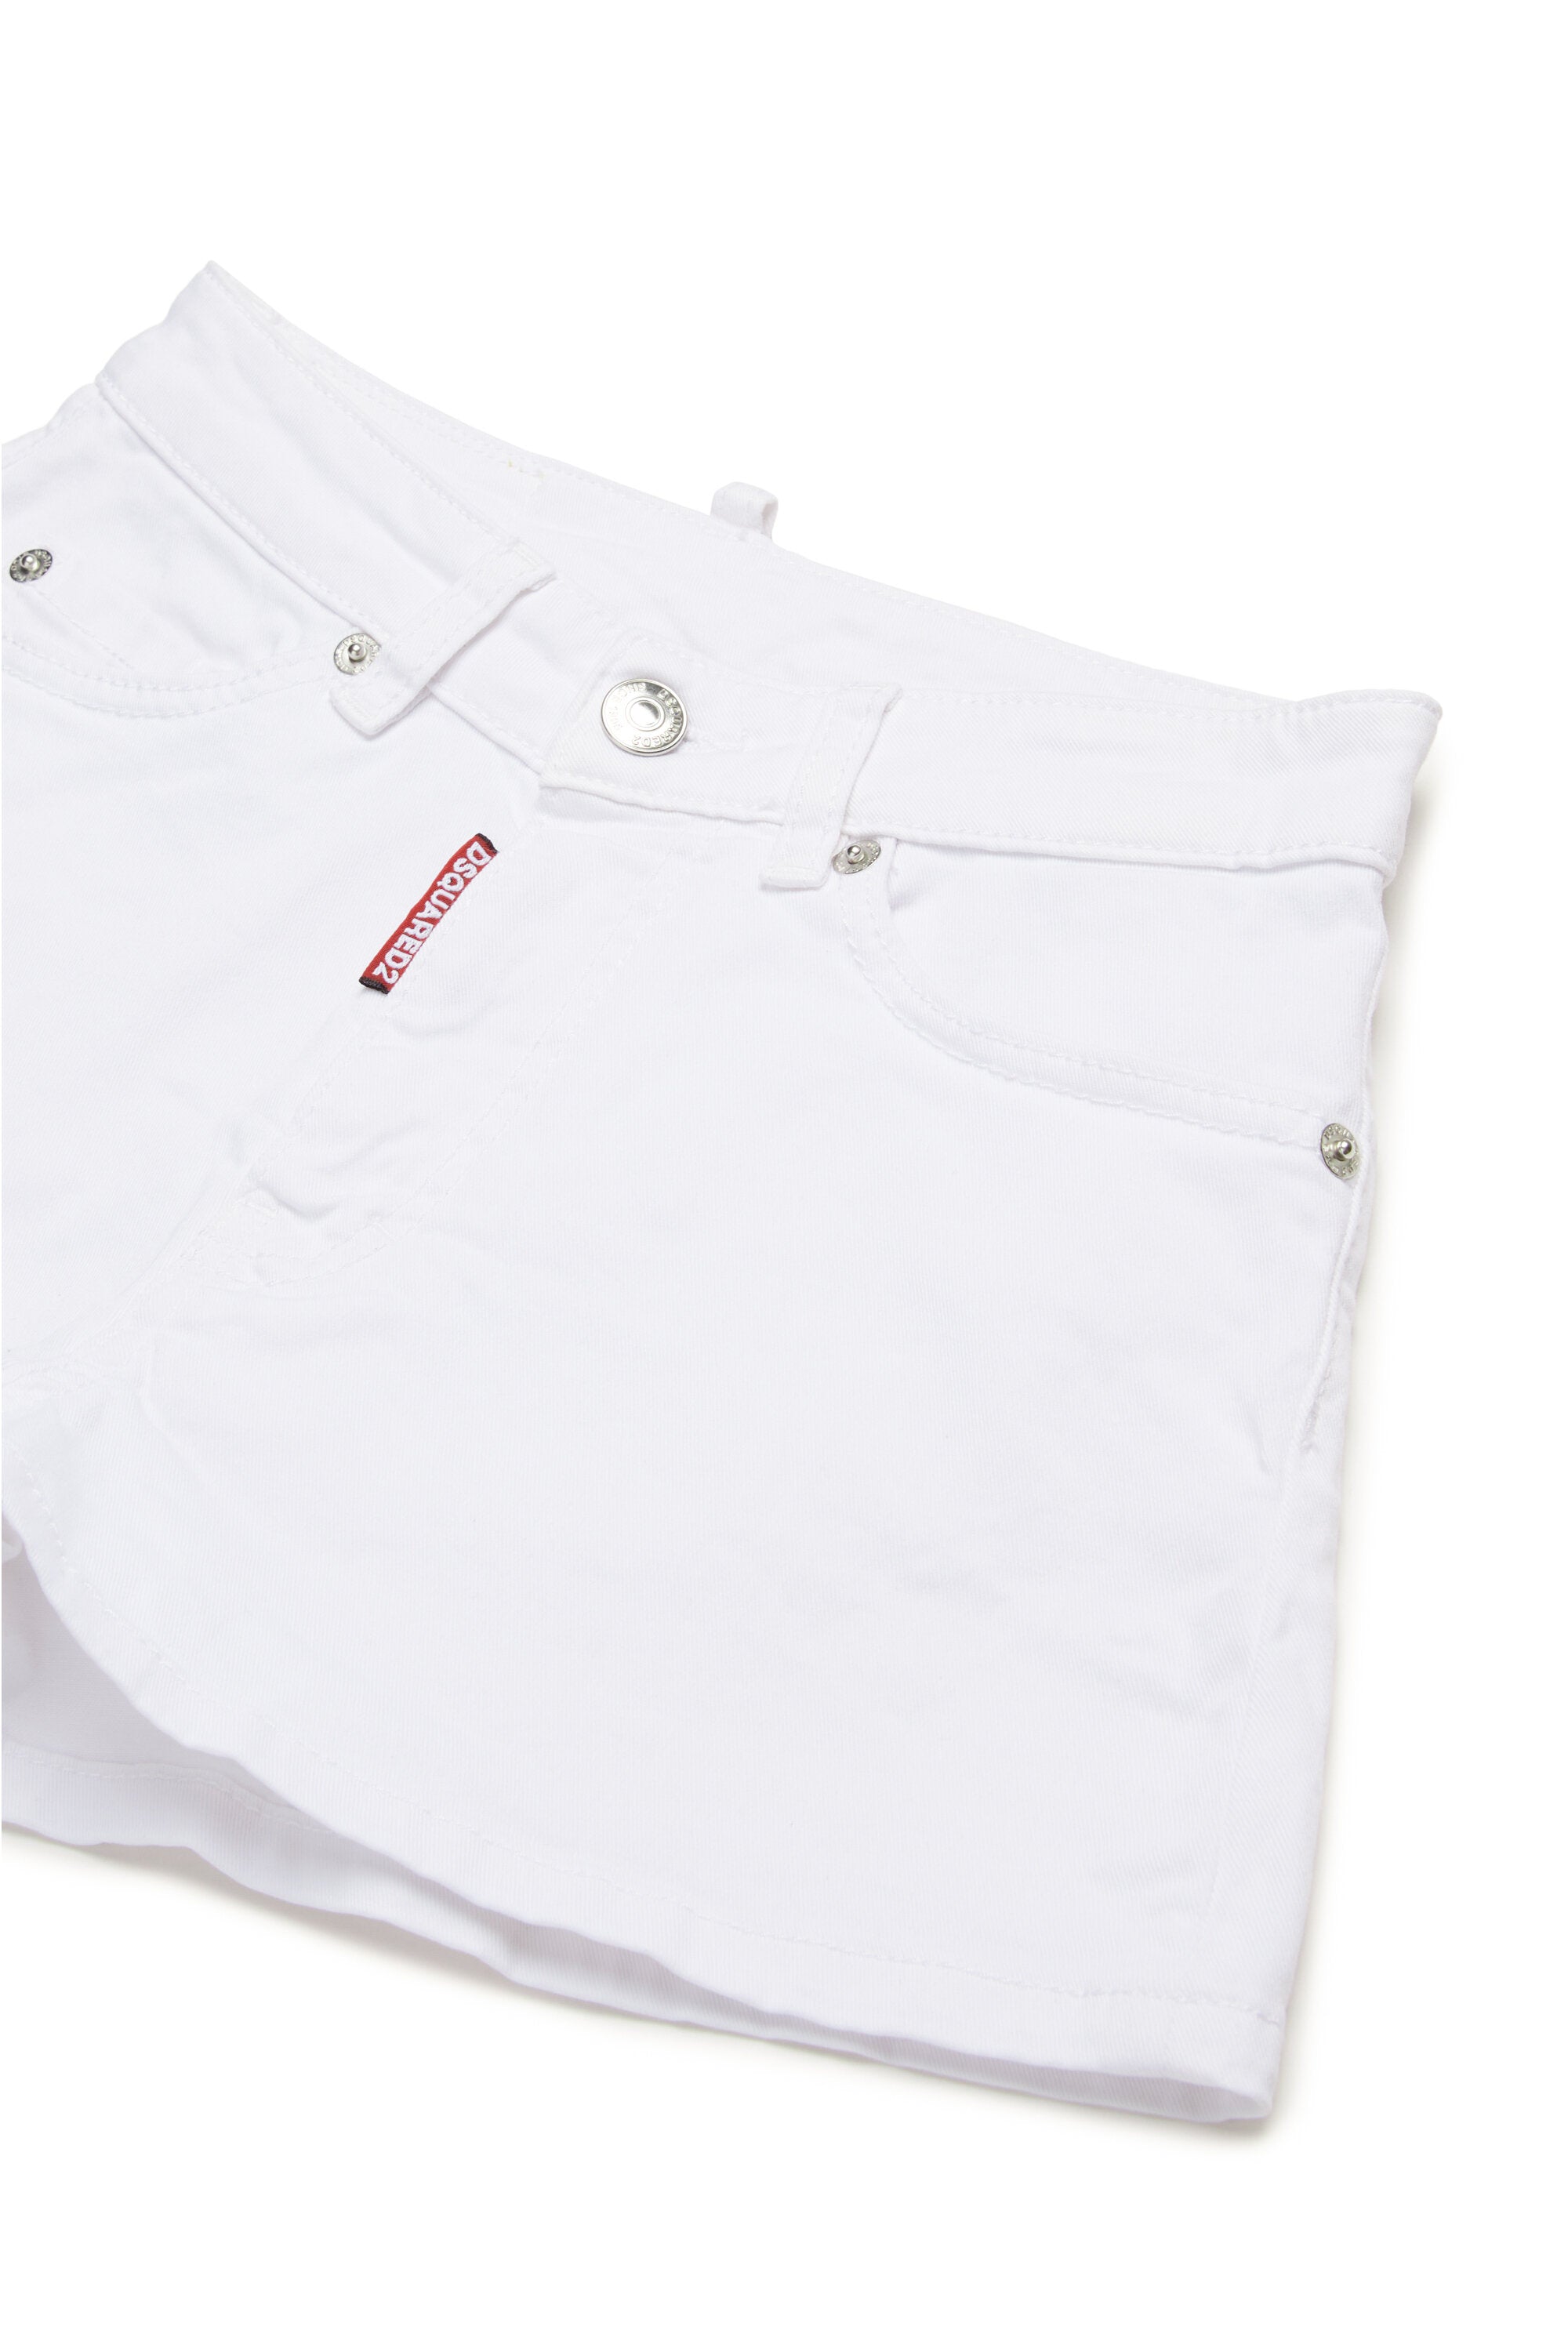 Shorts in denim con logo trasparente